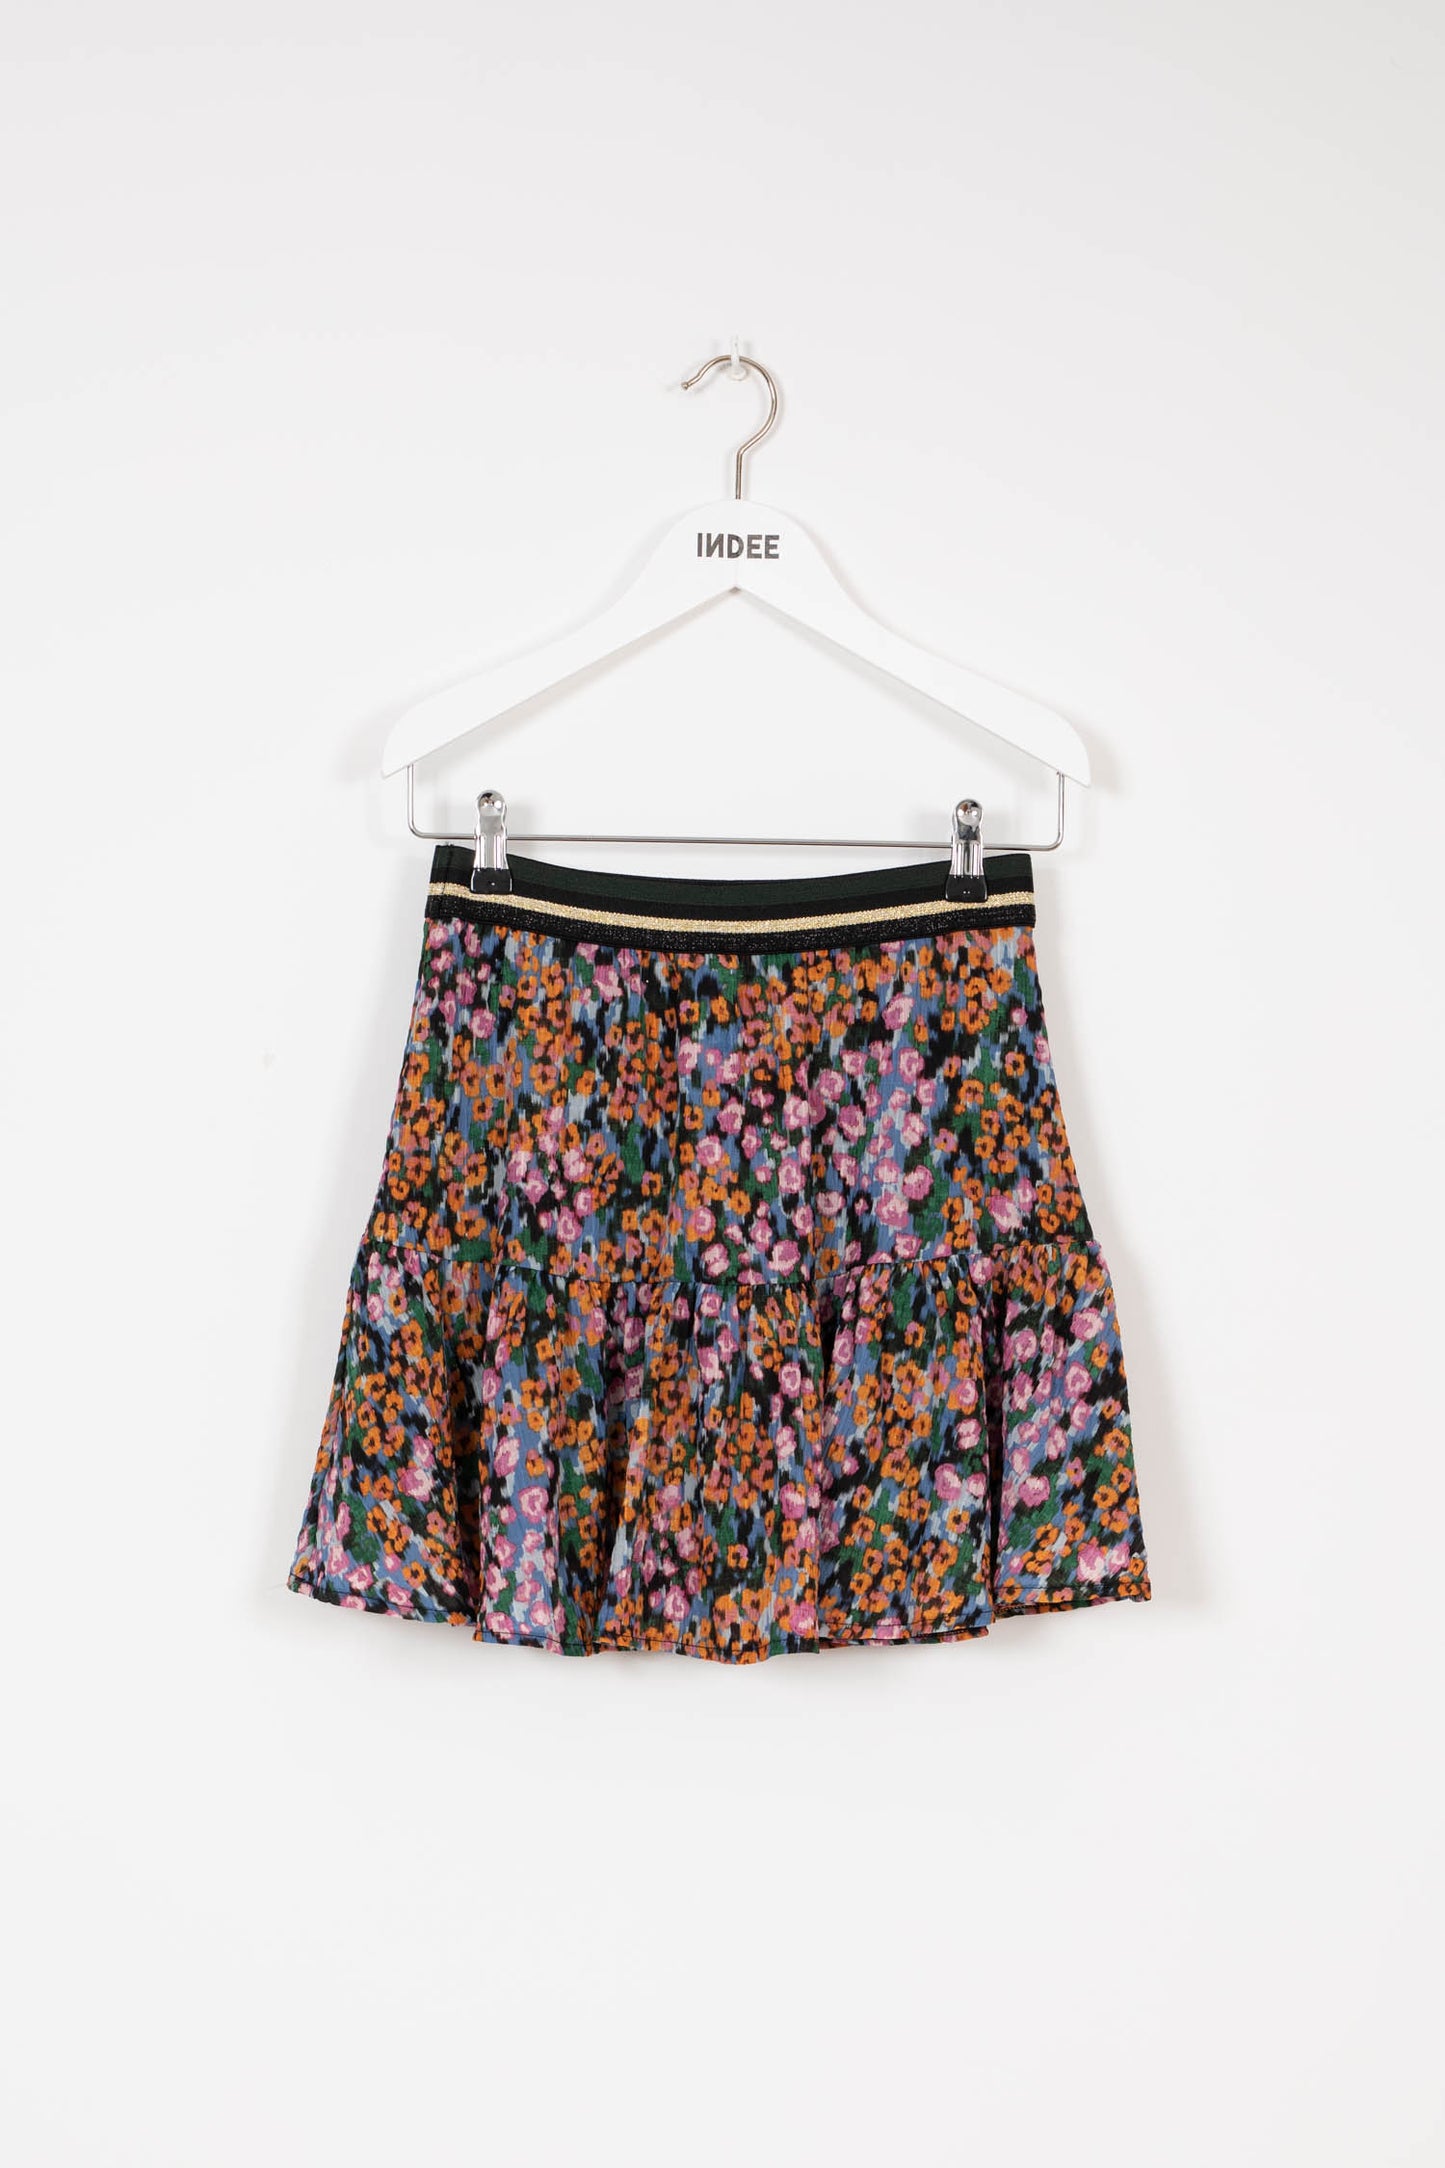 Indee Printed Skirt